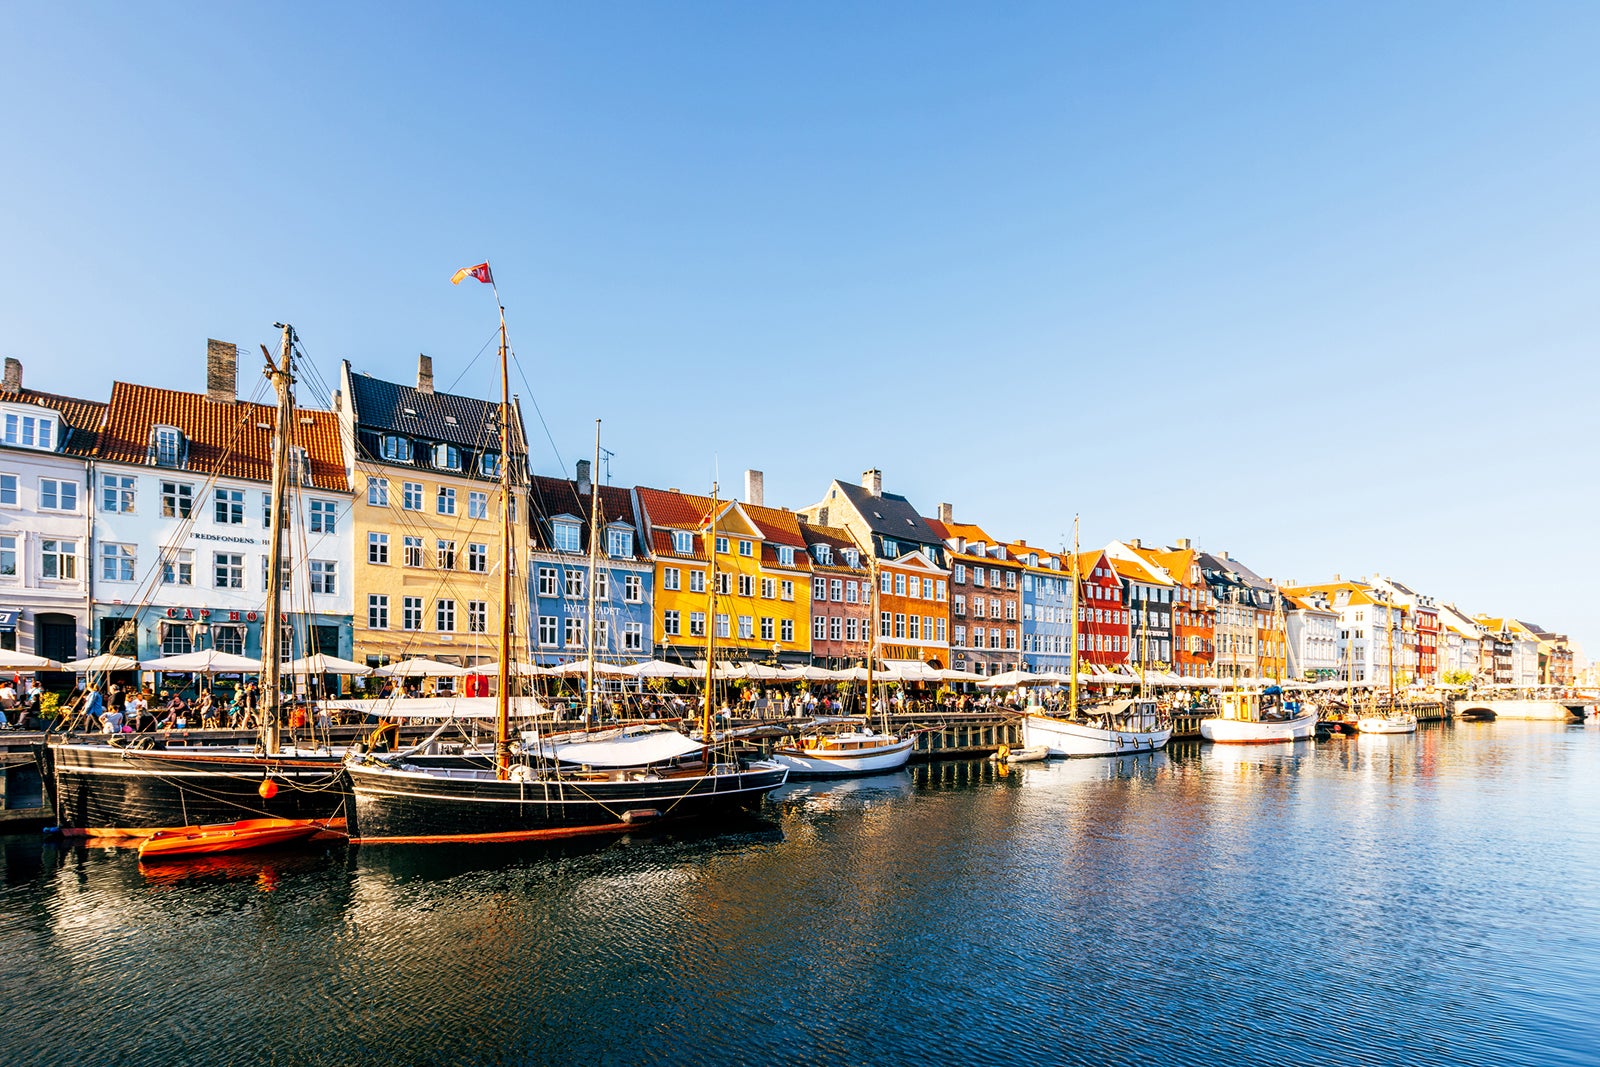 Rows of houses on the water in Copenhagen, Denmark